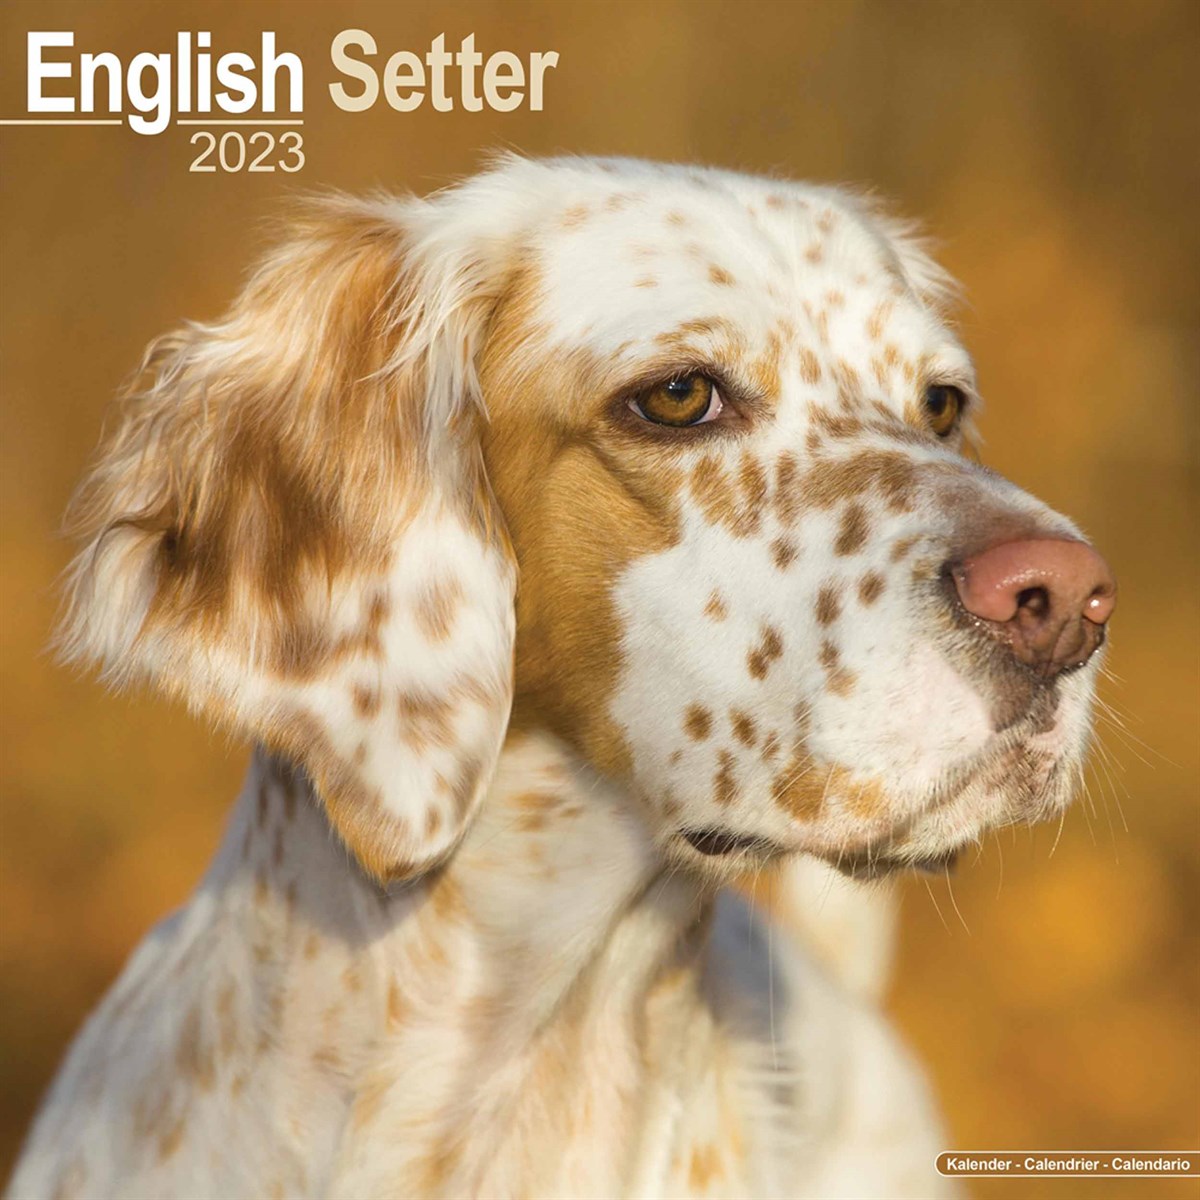 English Setter 2023 Calendars